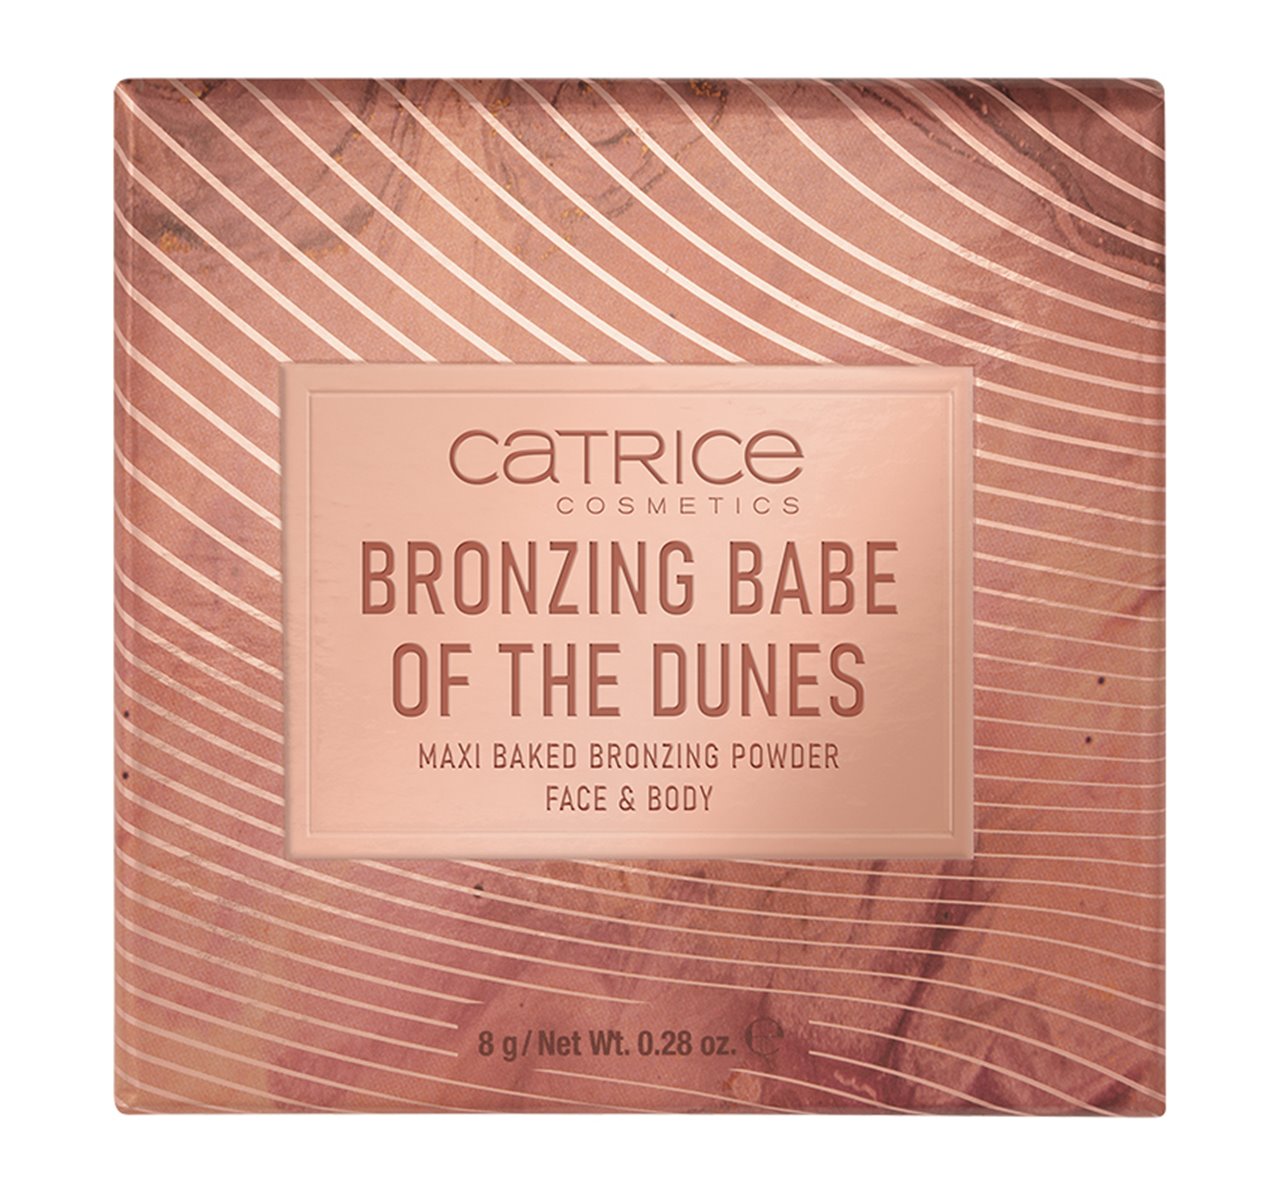 Dunes Bronzing Babe Catrice Powder-Face The Maxi Bronzing Baked Of